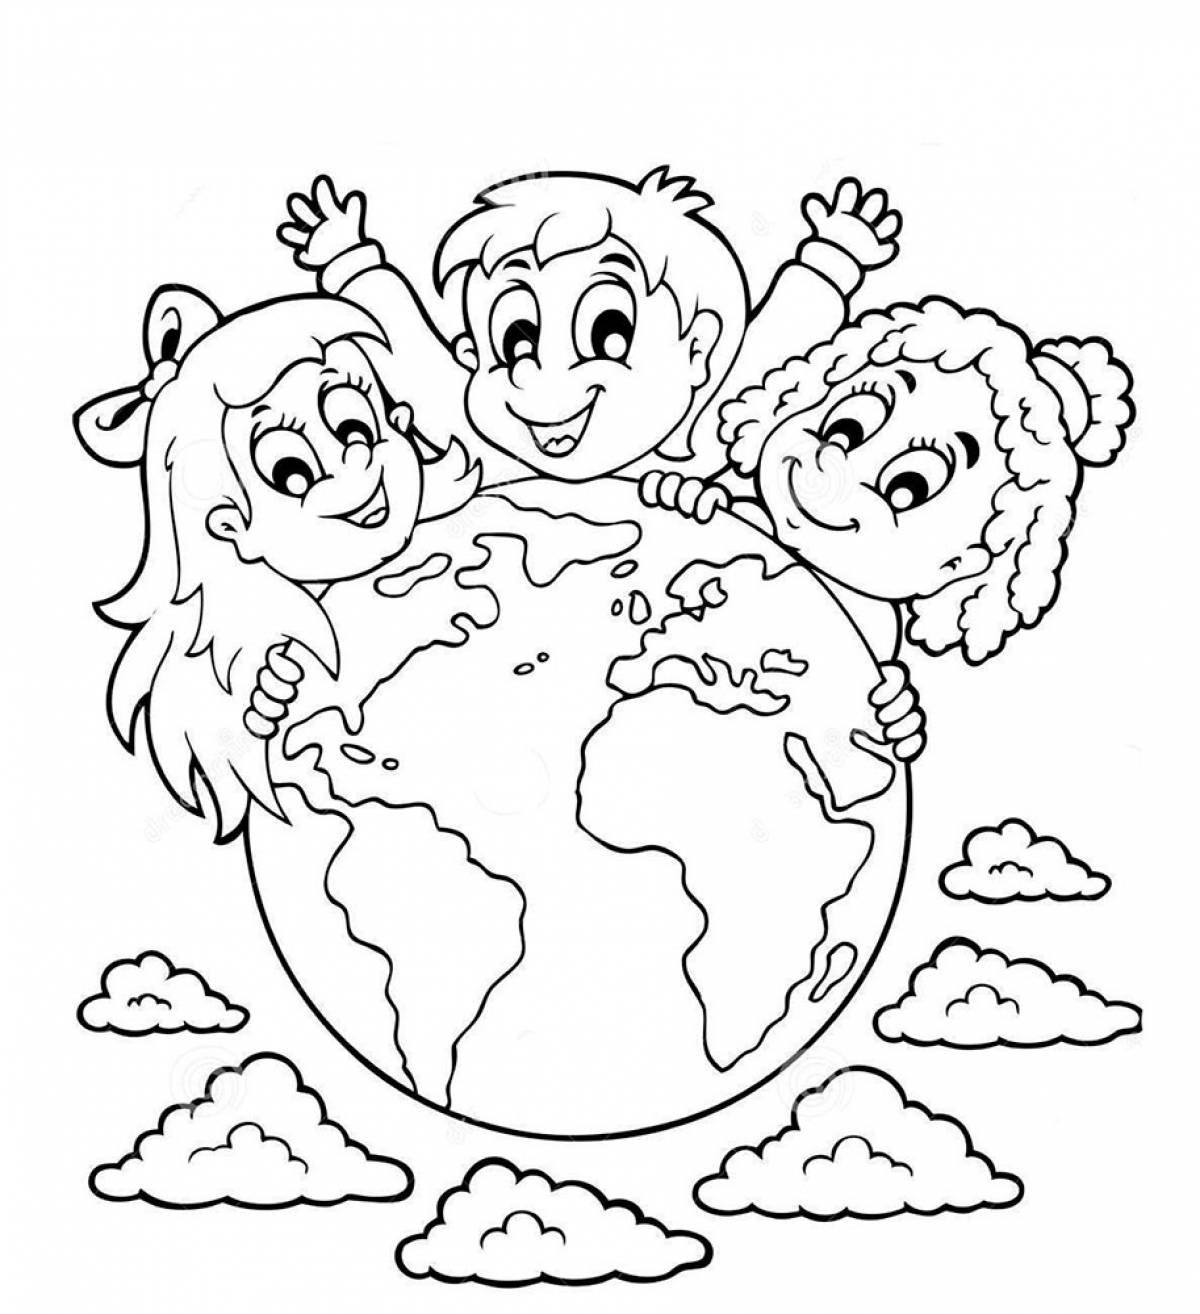 Children with a globe